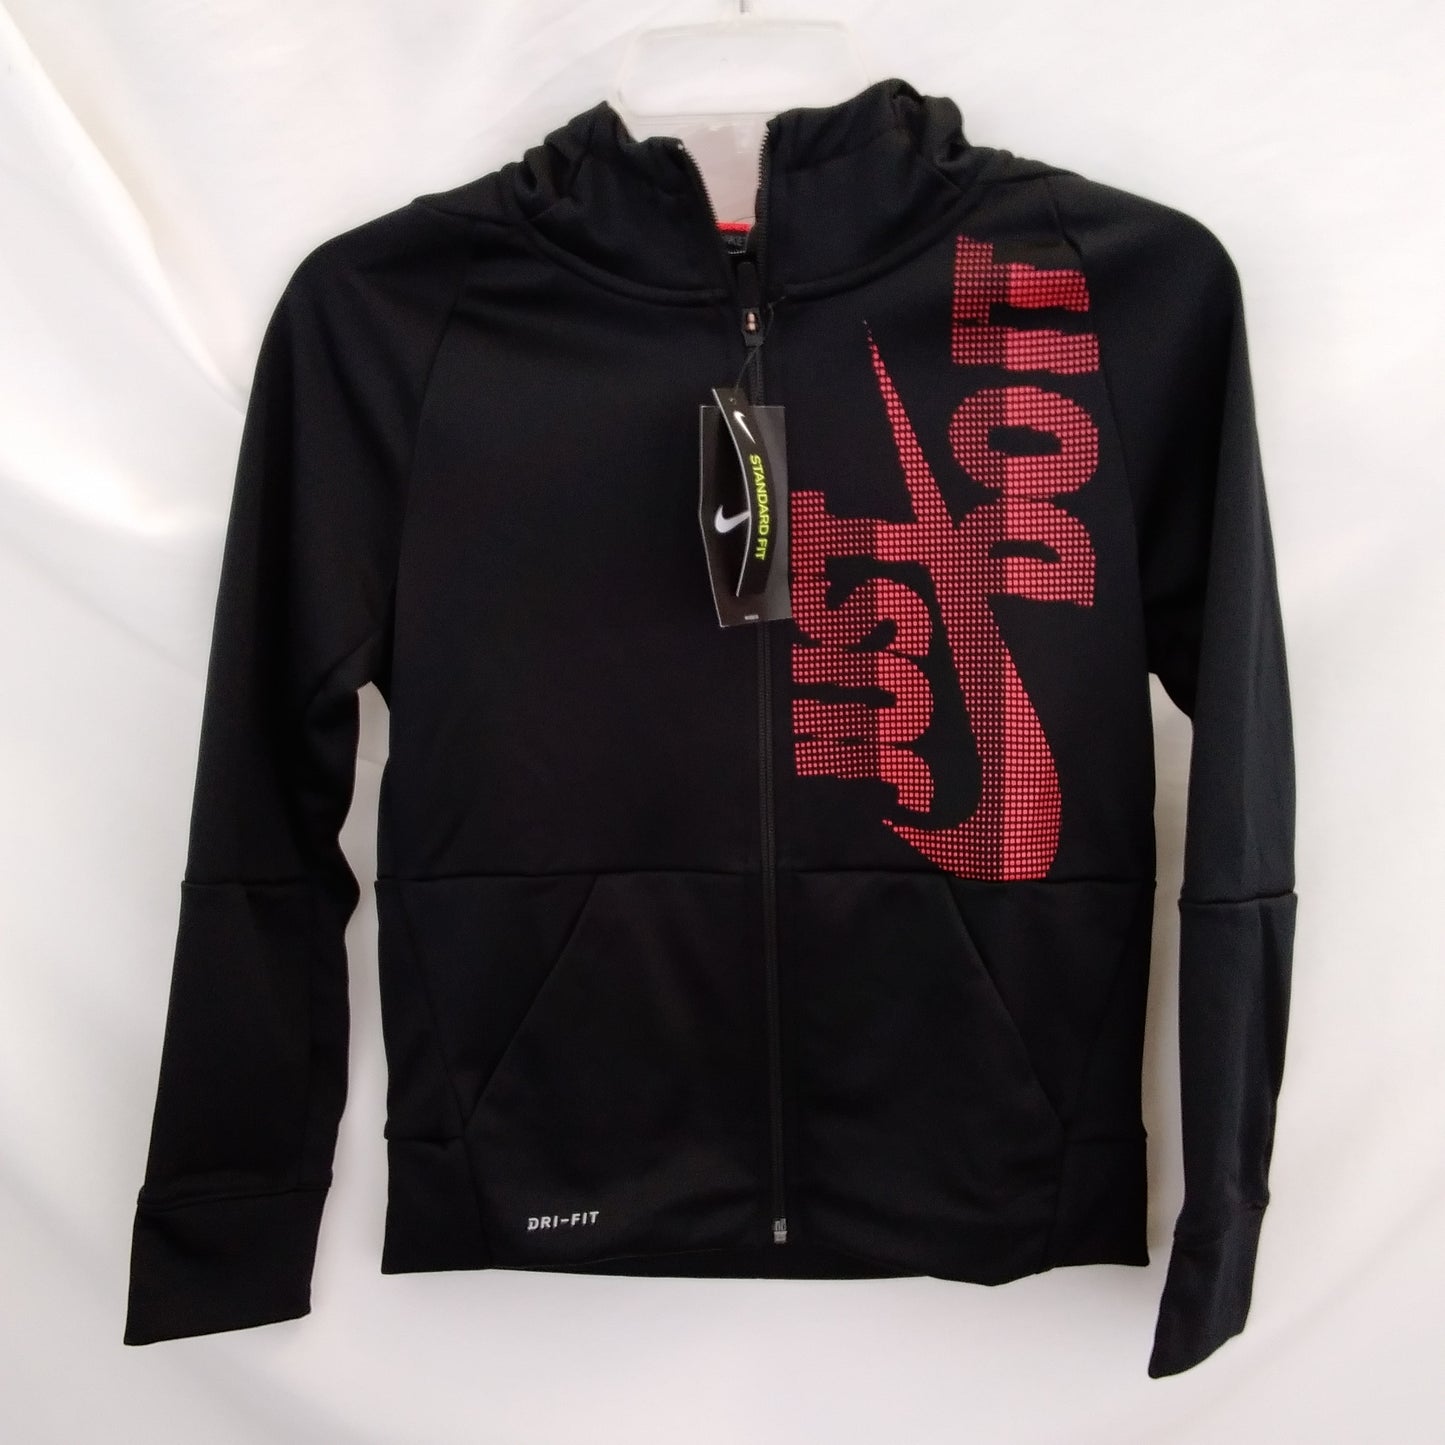 NWT - Nike Boy's Black Hooded Full Zipper Dri-Fit Jacket - Size: M